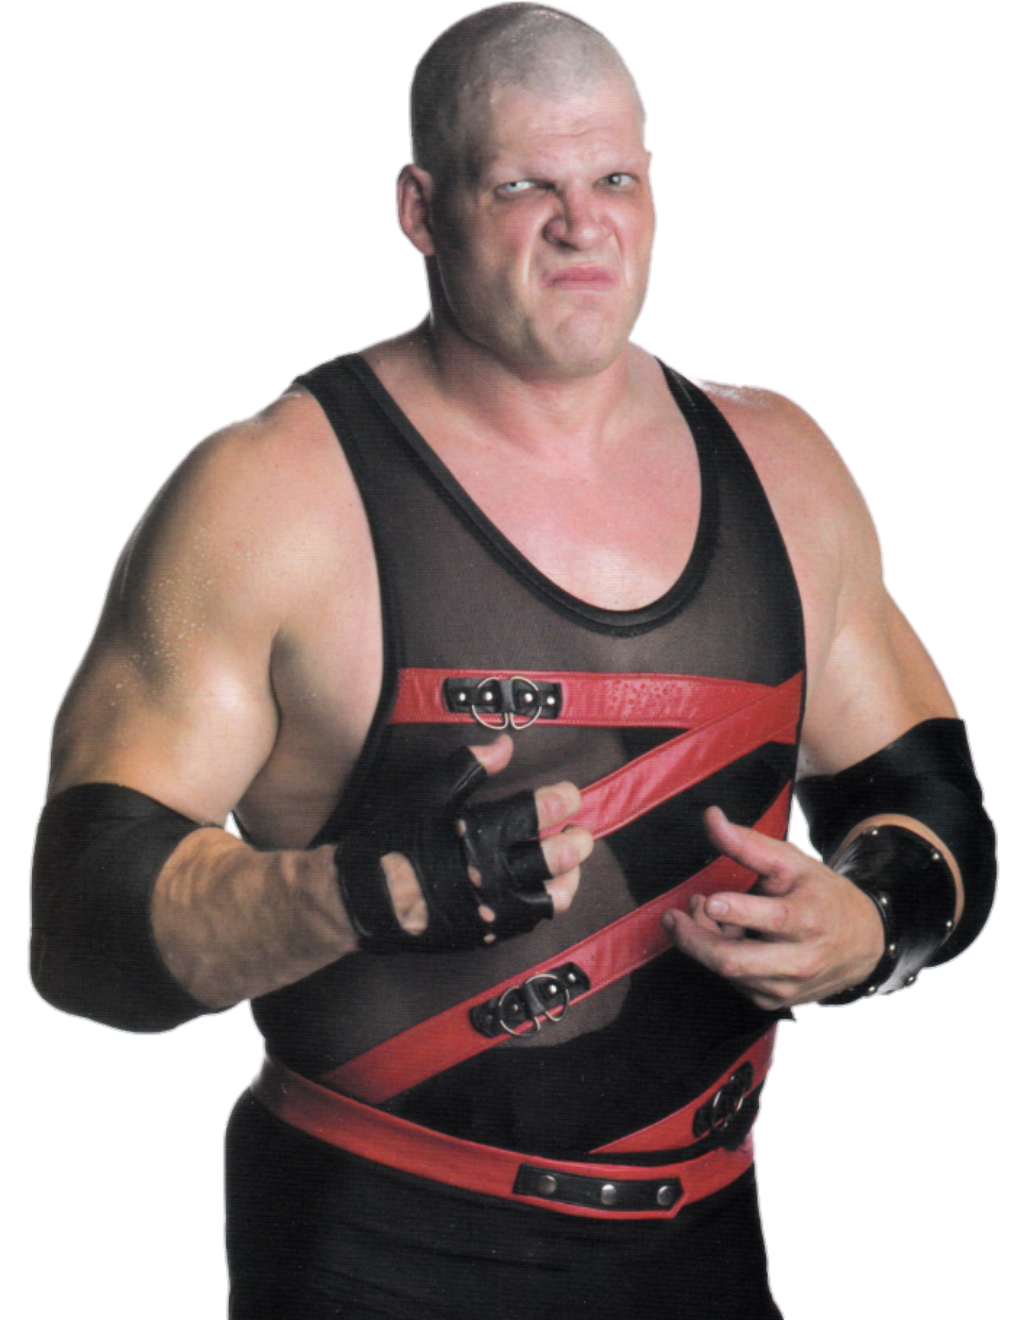 Kane - WWE - Image Abyss